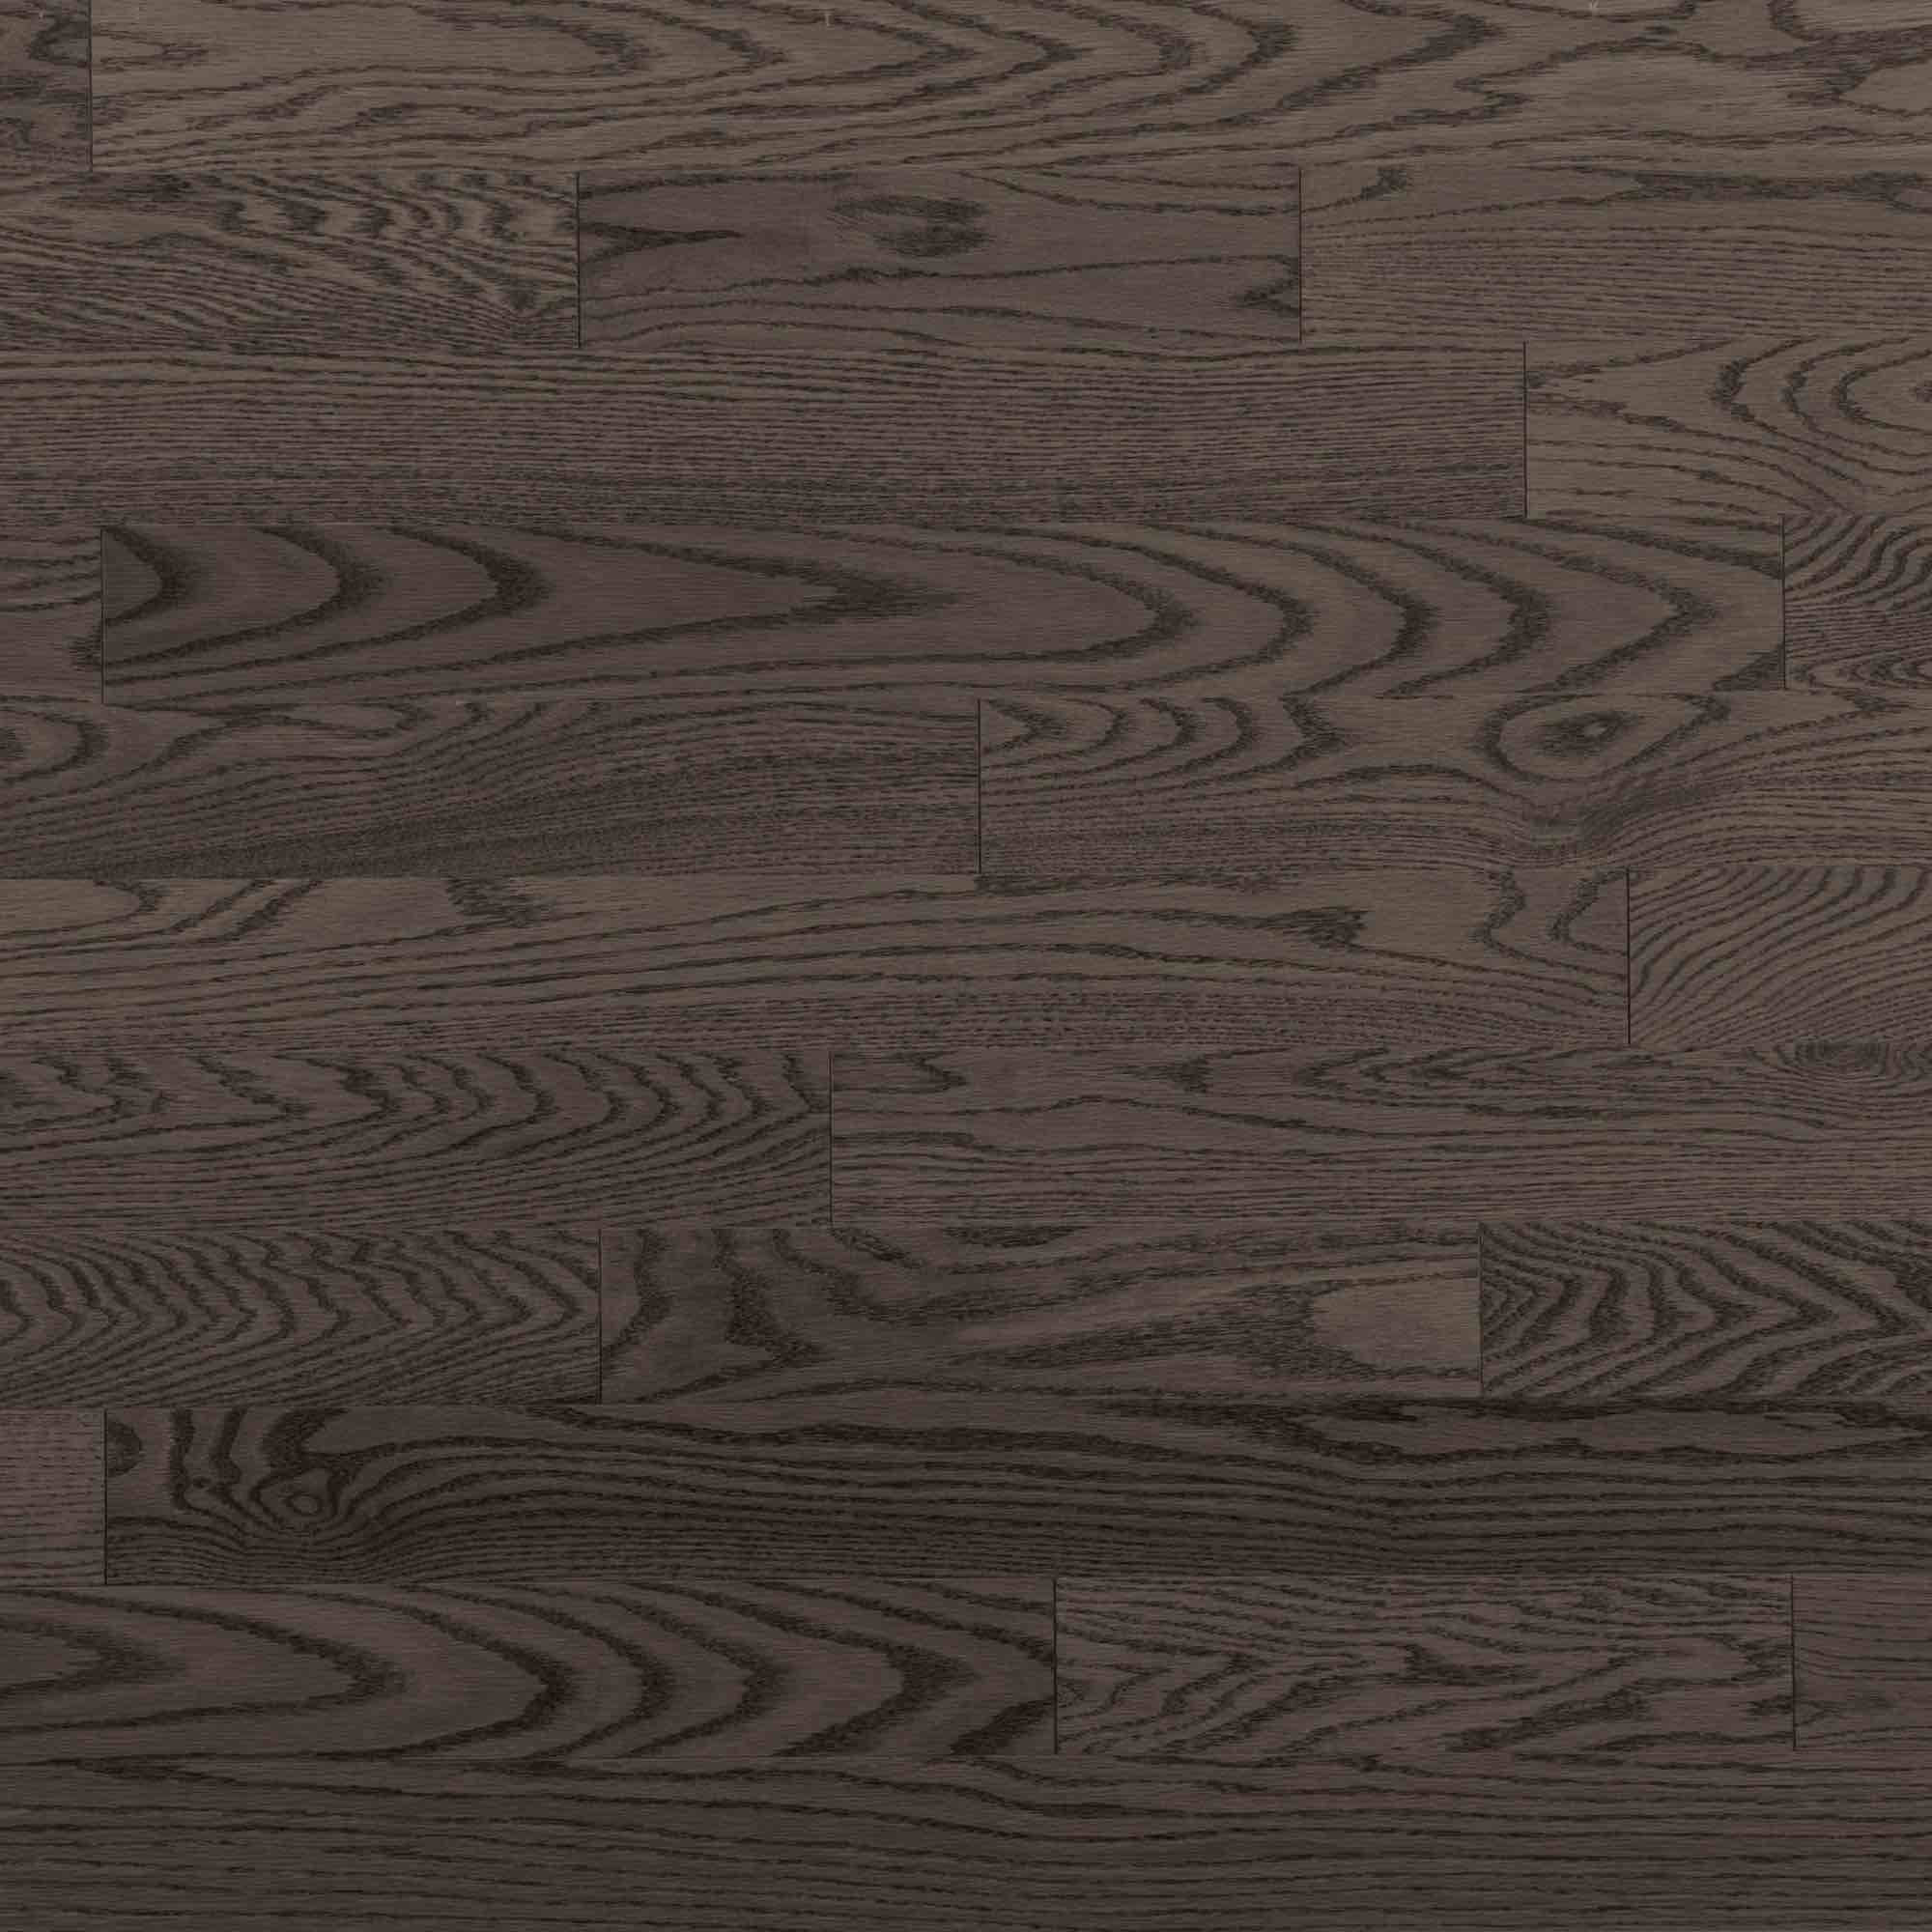 hardwood flooring on concrete slab of hardwood westfloors west vancouver hardwood flooring carpet with regard to featured hardwoods red oak charcoal